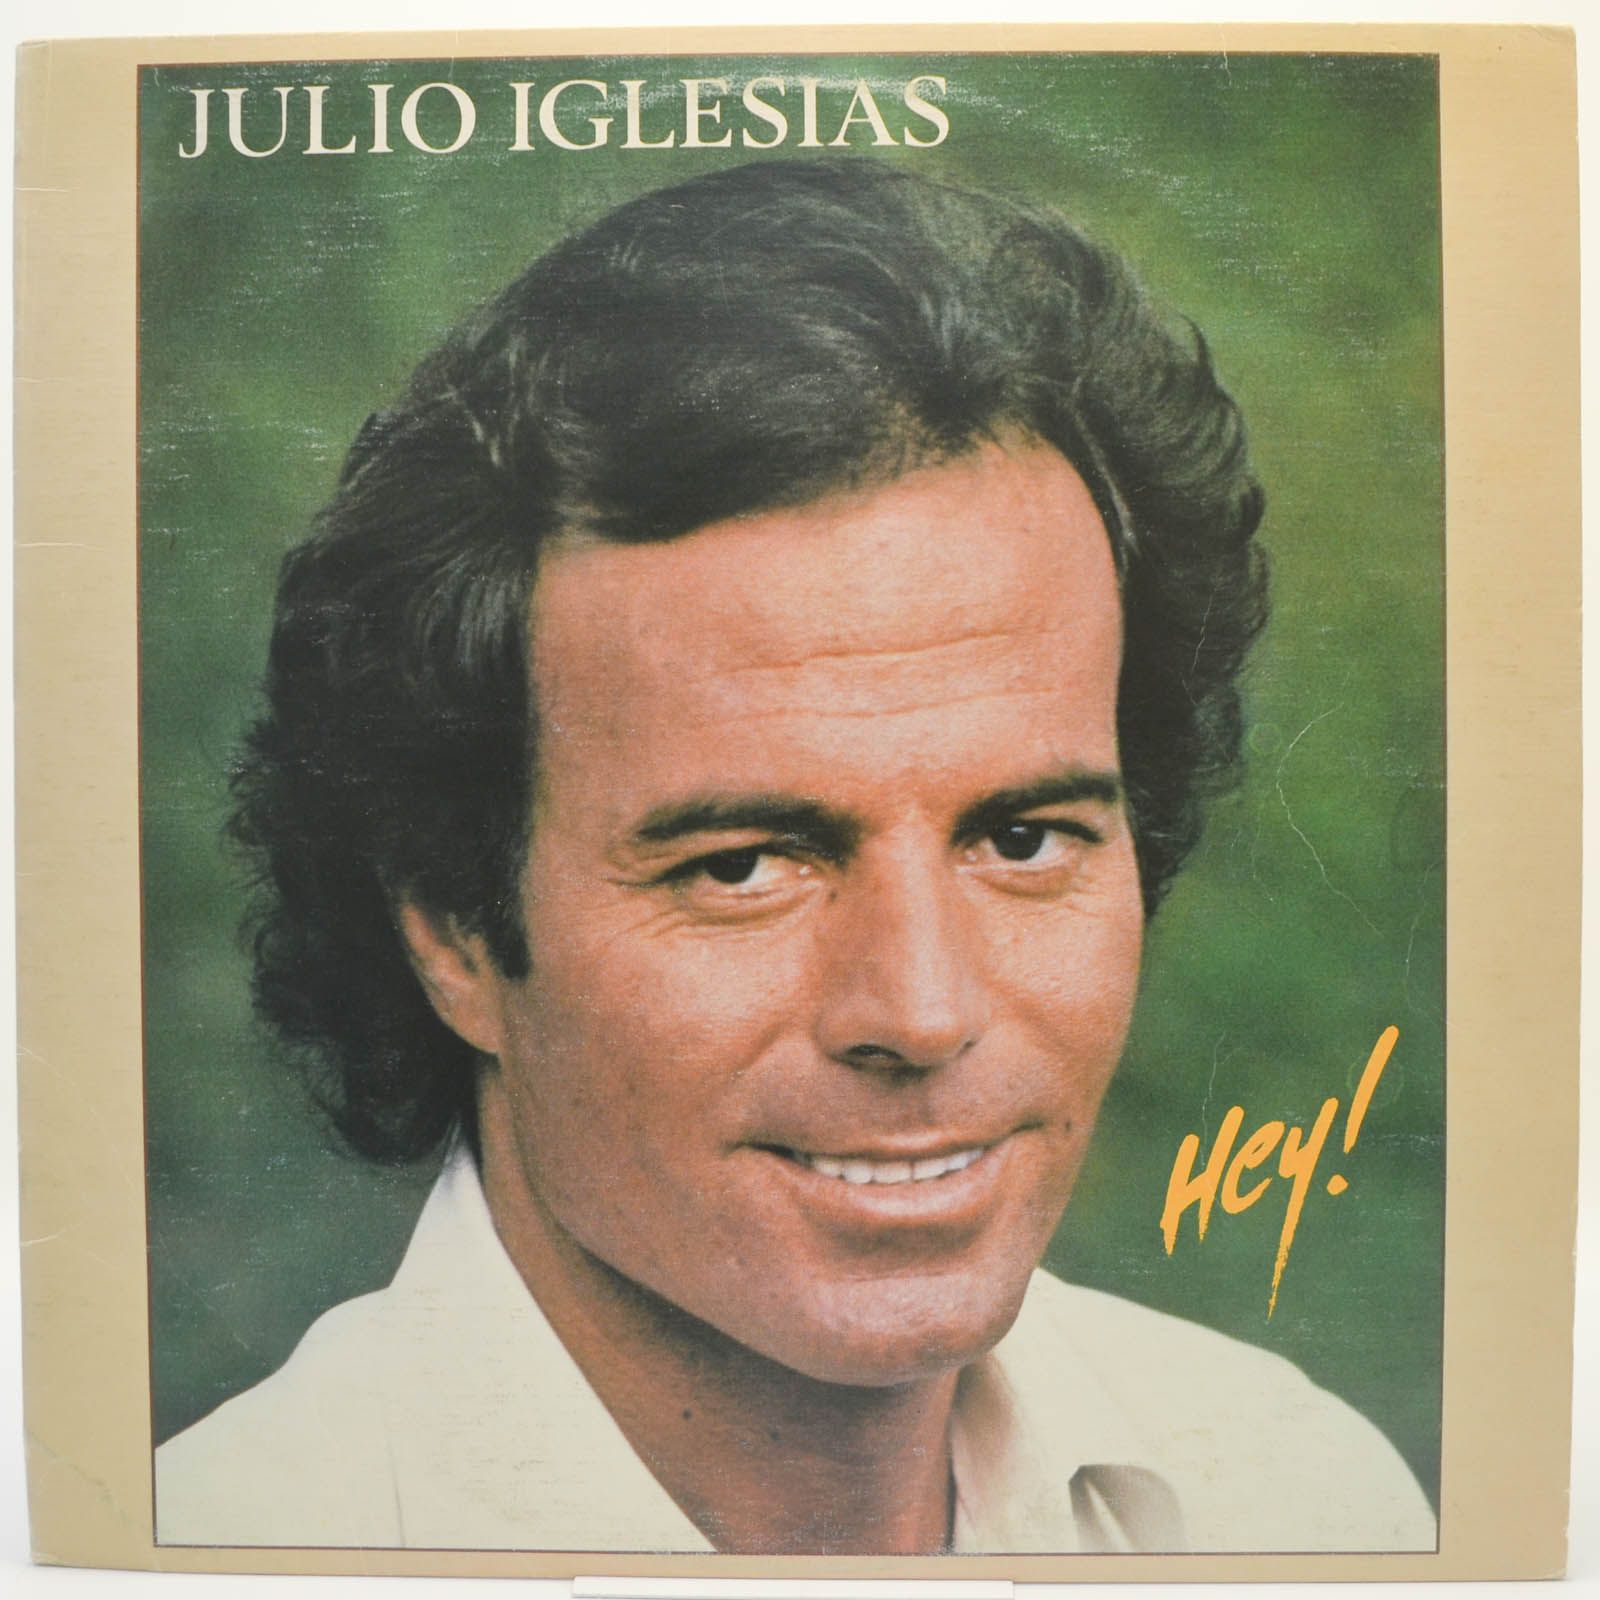 Julio Iglesias — Hey!, 1980